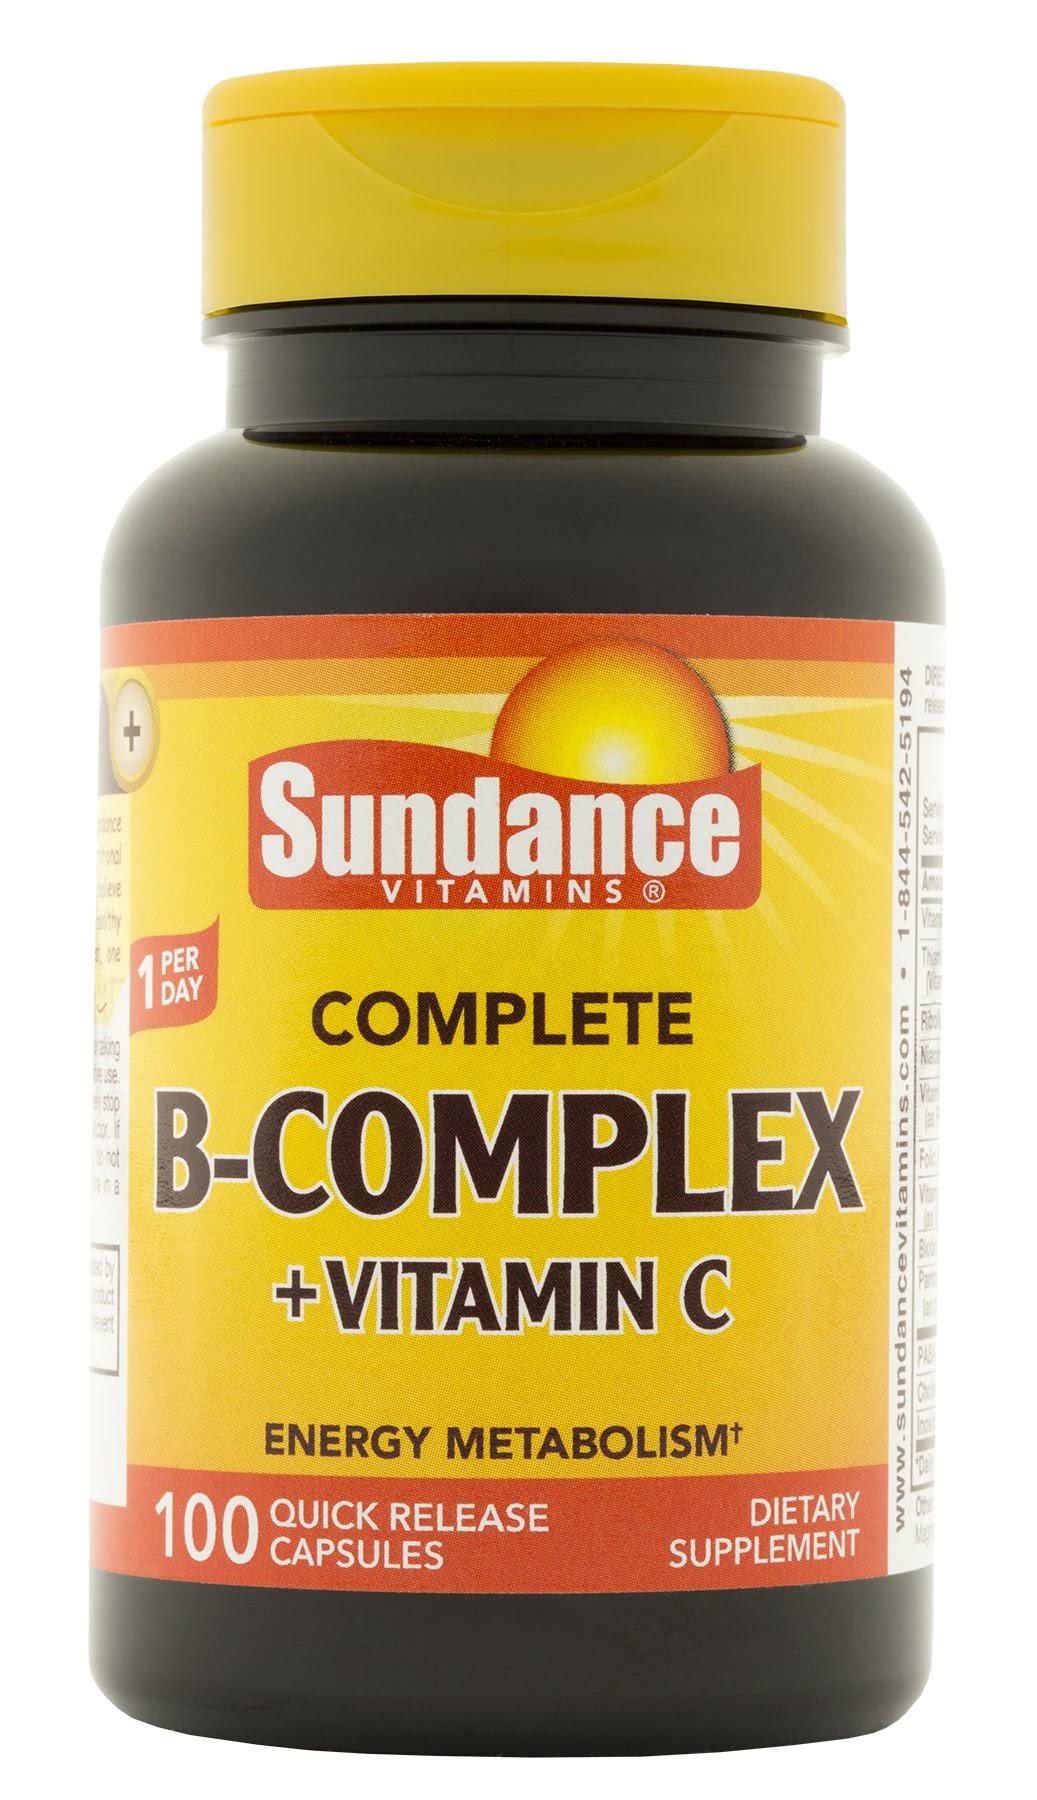 Sundance Complete B Complex Plus Vitamin C Supplement - 100 Tablets